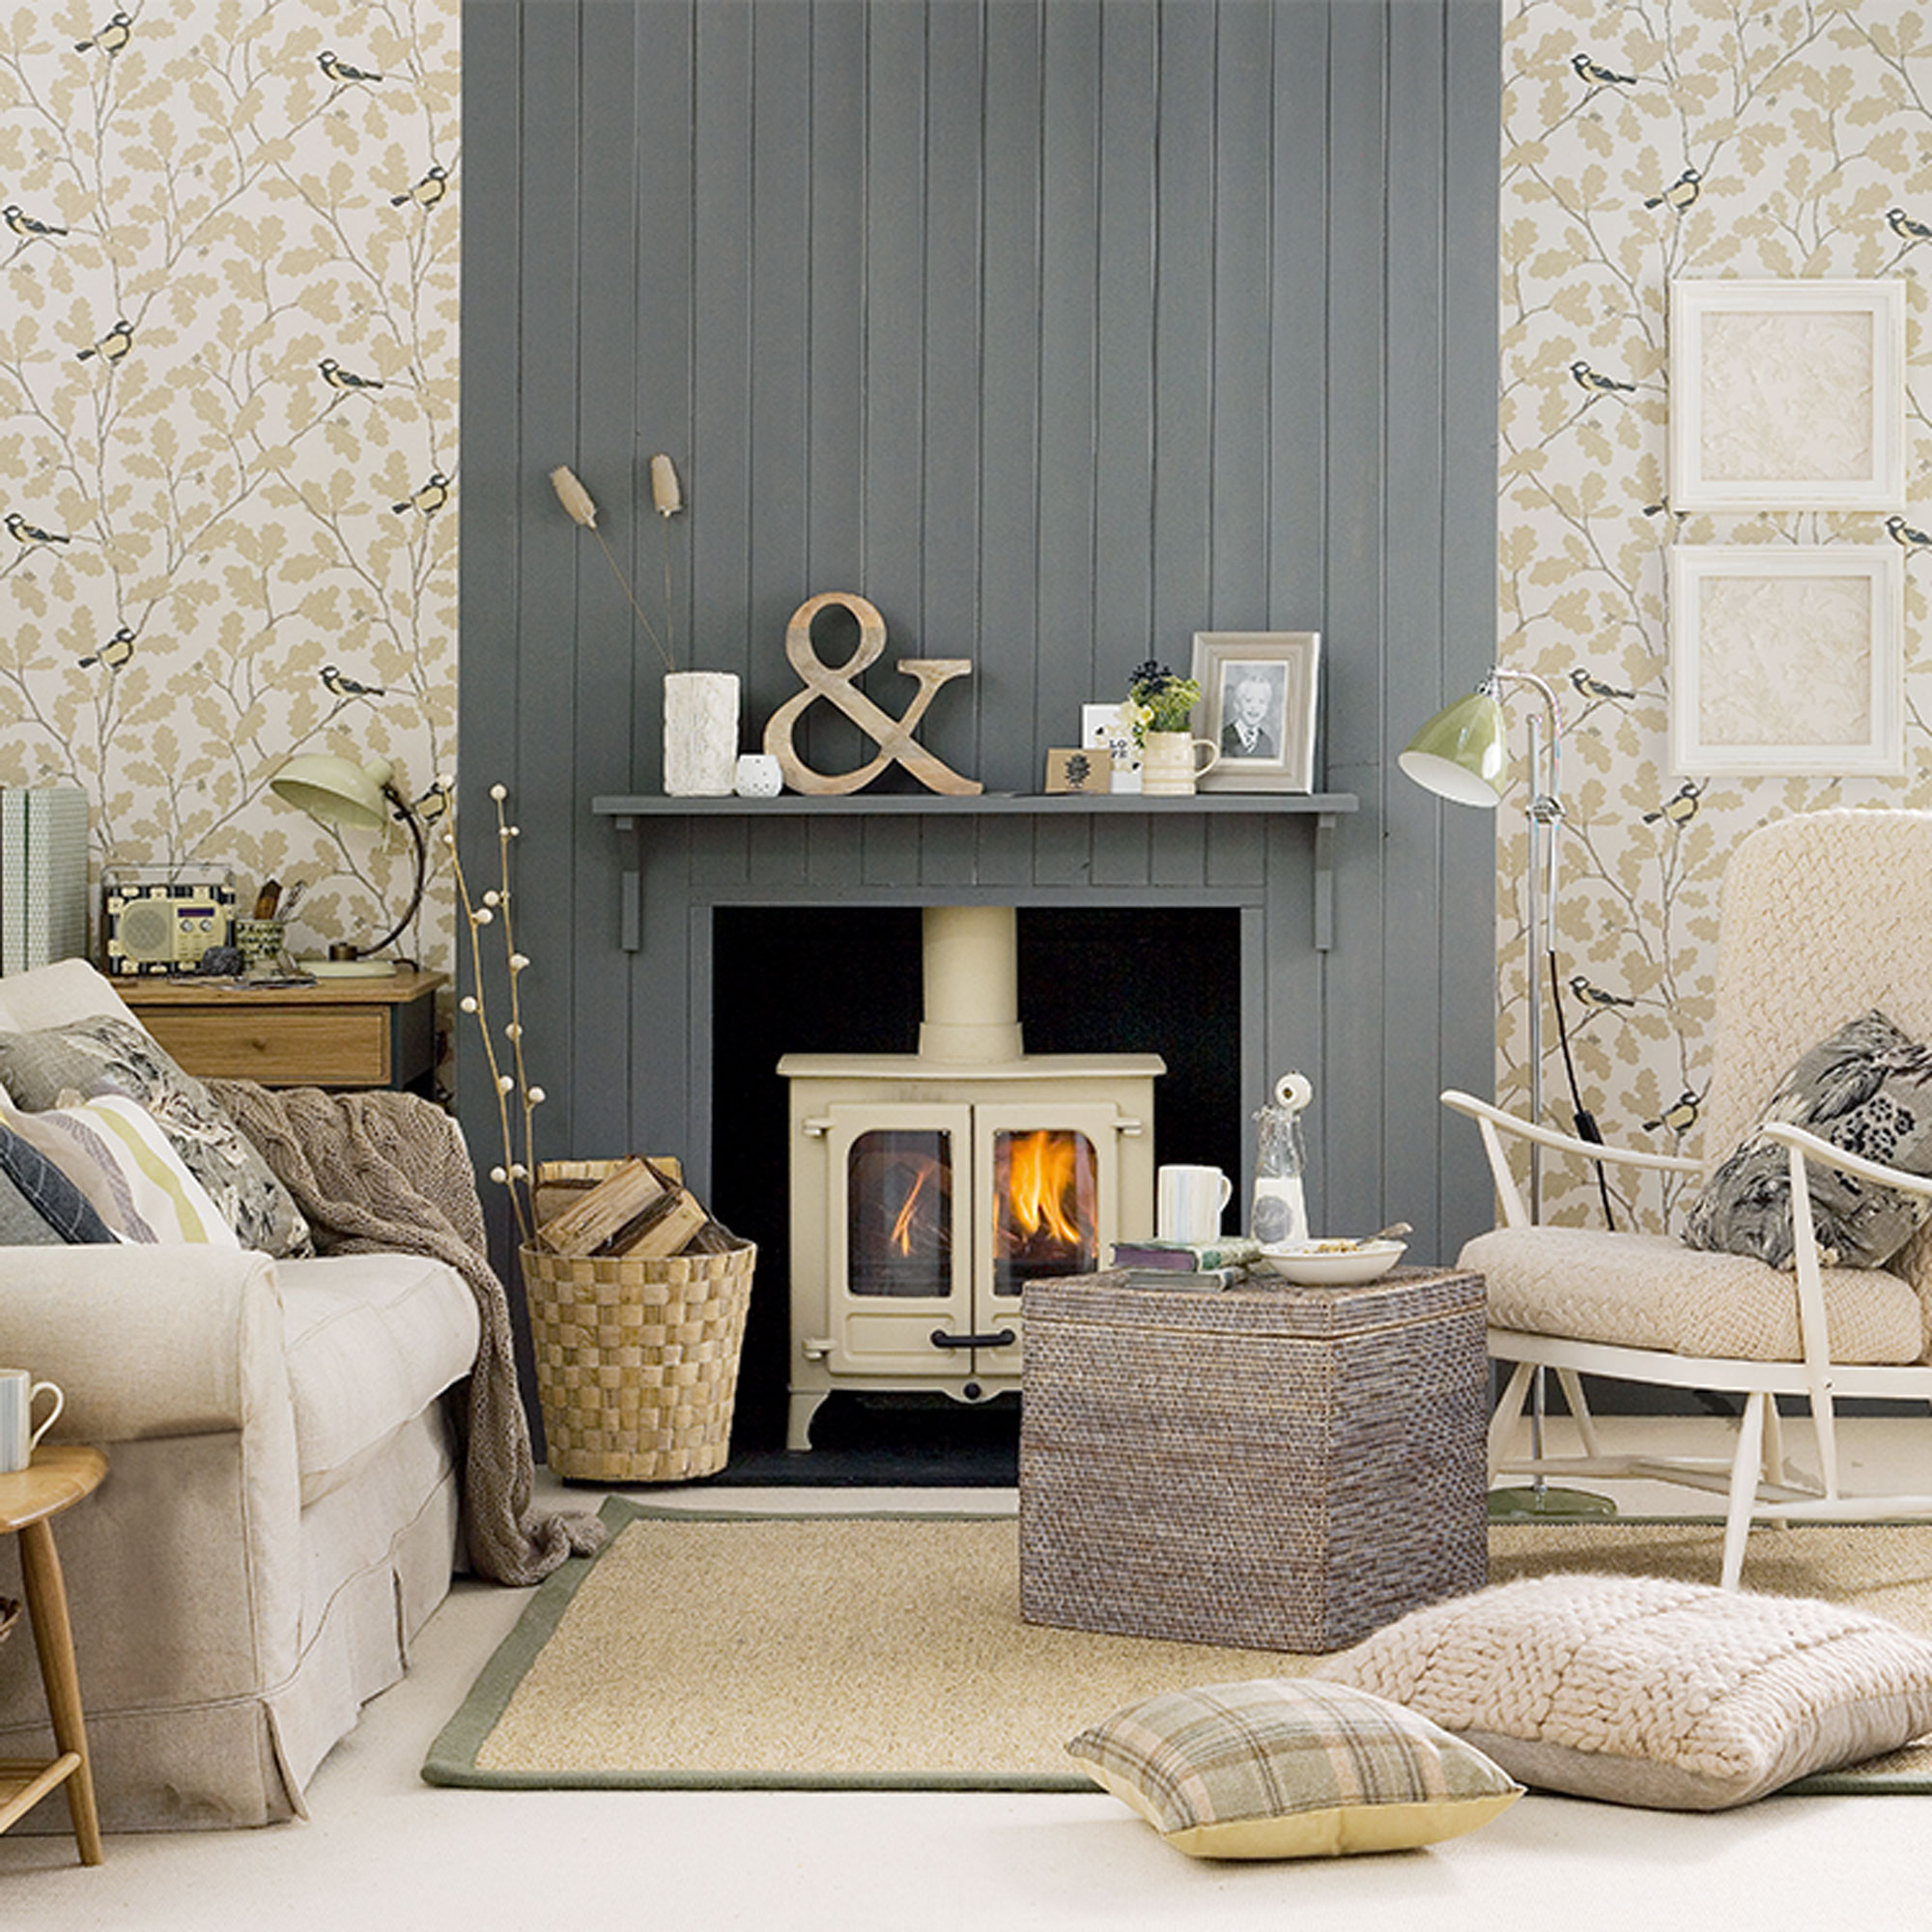 Small Living Room With Fireplace Design | Baci Living Room